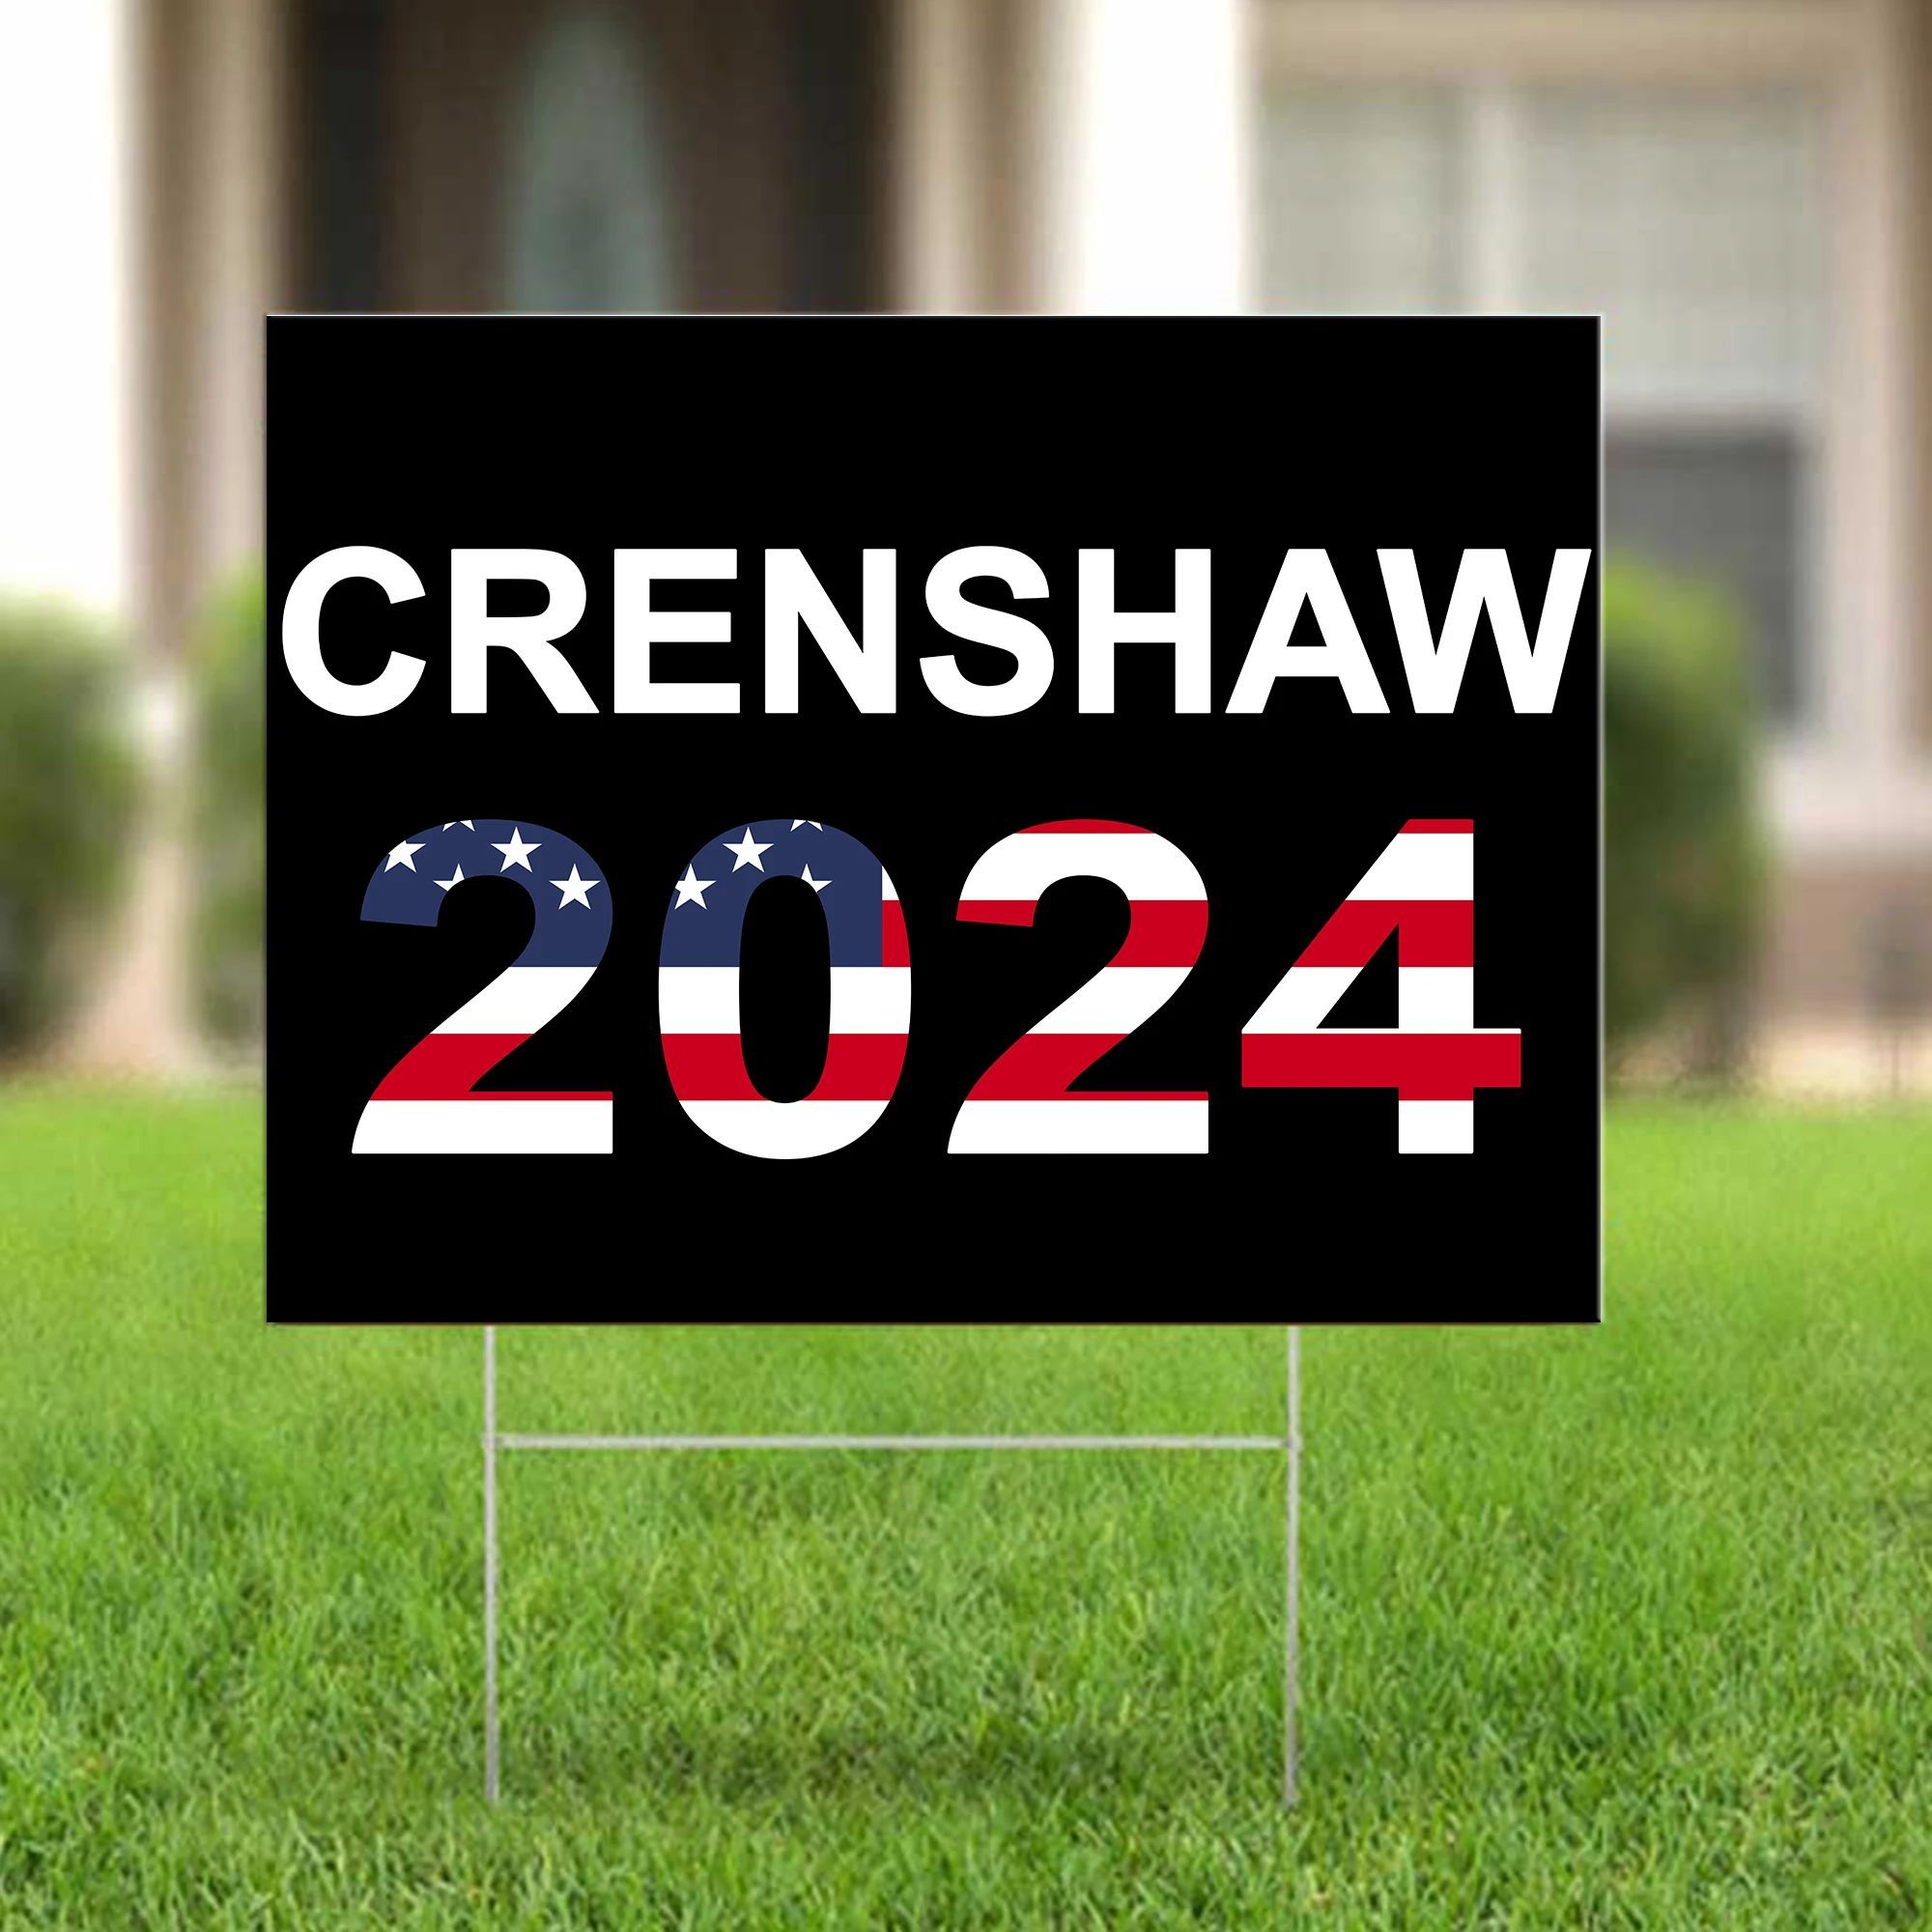 Dan Crenshaw 2024 Yard Sign Conservative Republicans Patriot Vote Crenshaw For President